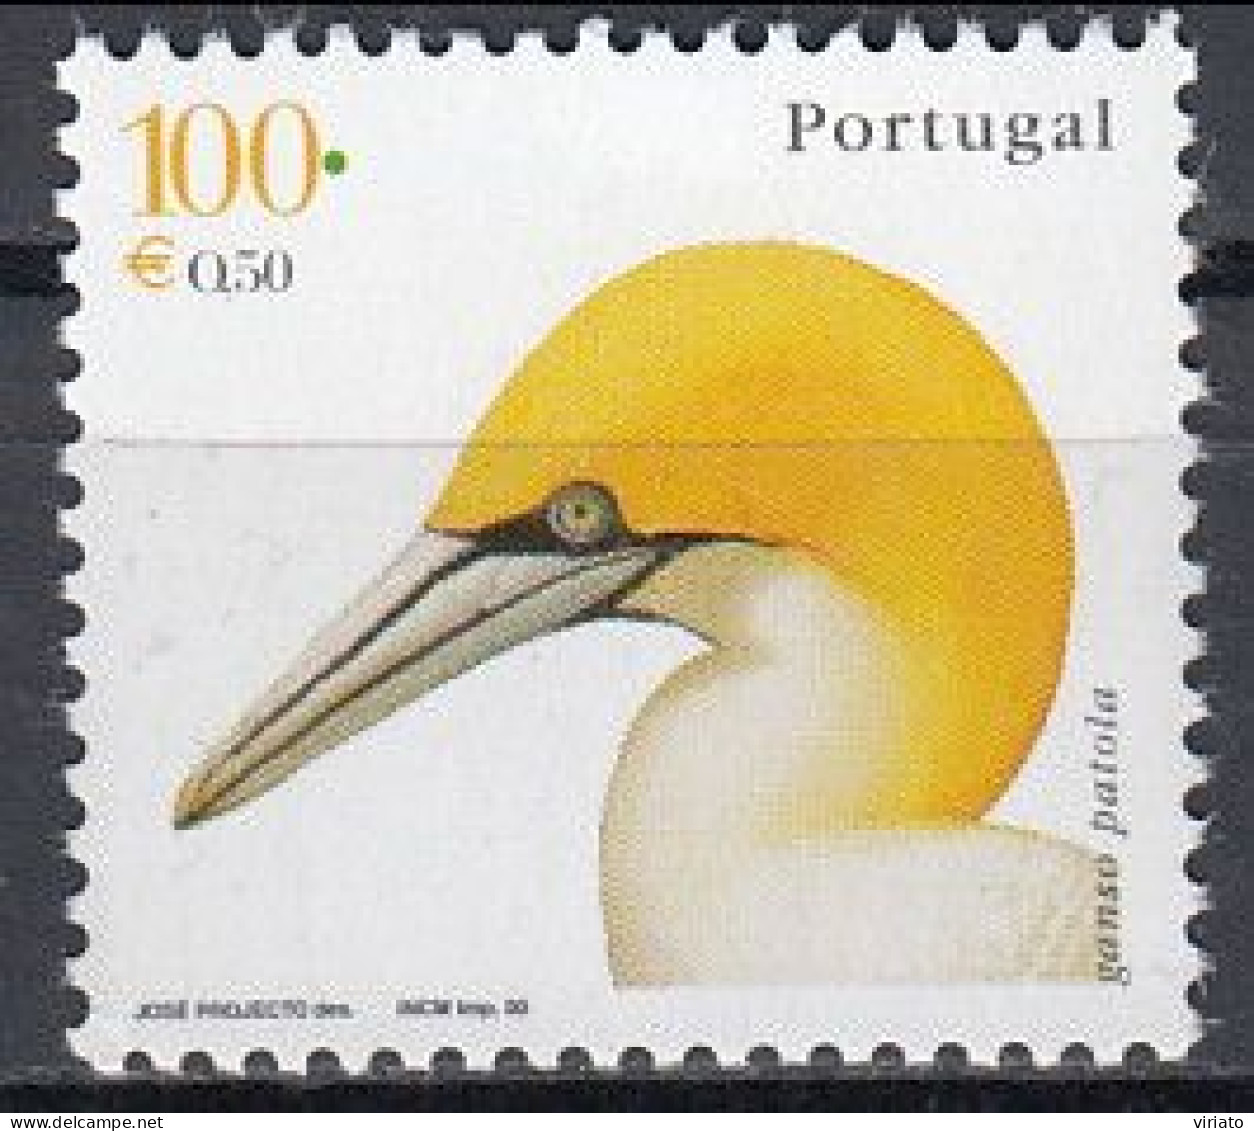 Portugal 2000 (AVE009) (MNH) (Mi 2391) - Northern Gannet (Morus Bassanus) - Albatrosse & Sturmvögel